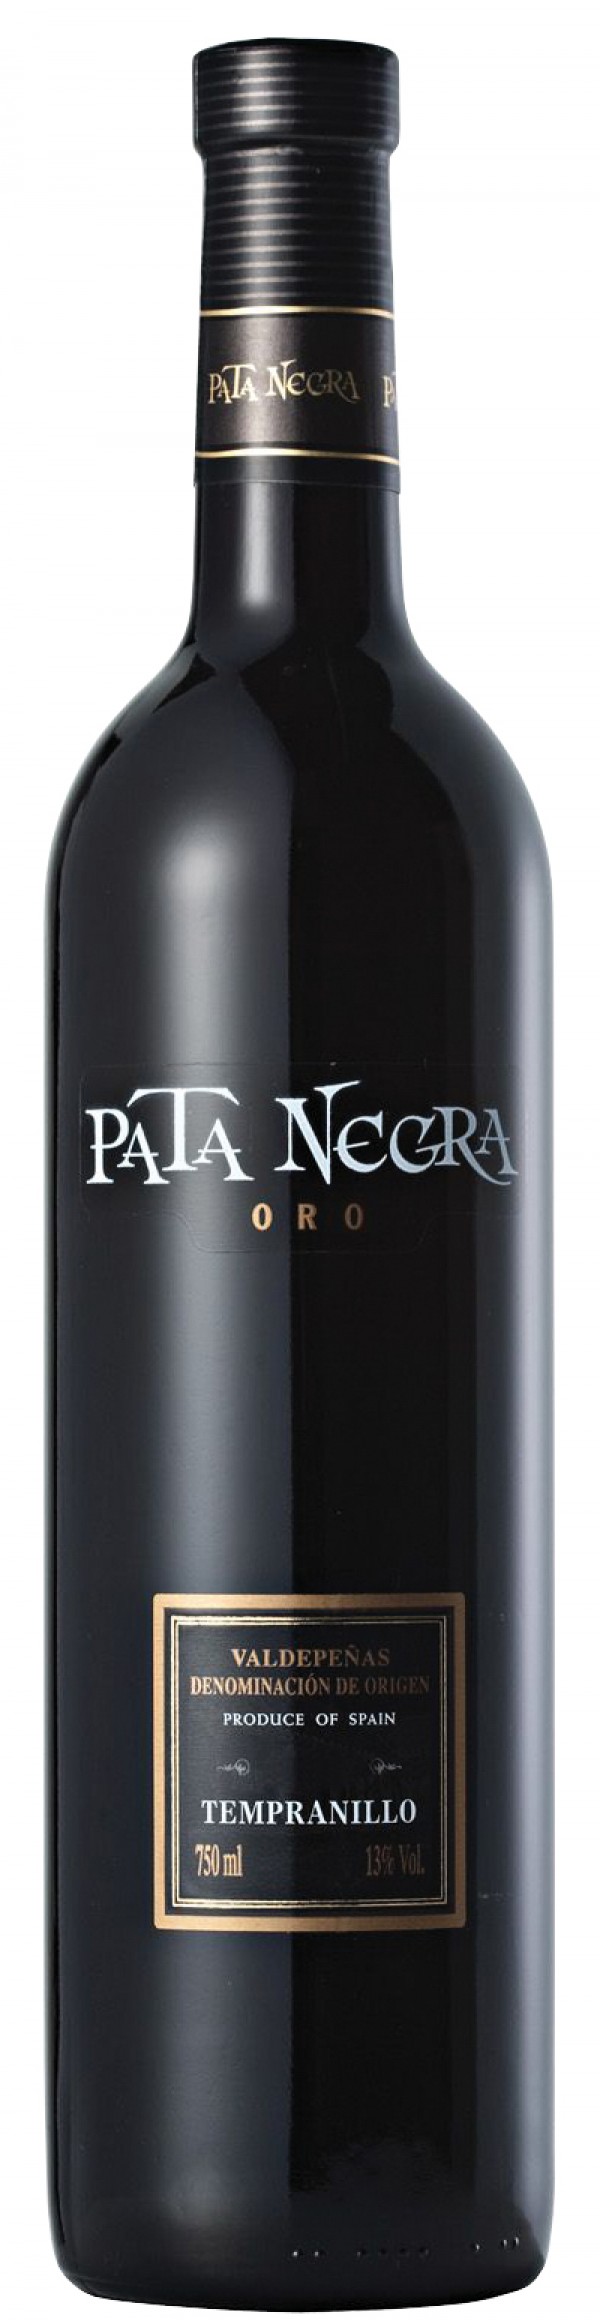 Vinho espanhol Pata Negra Oro tempranillo 750 ml